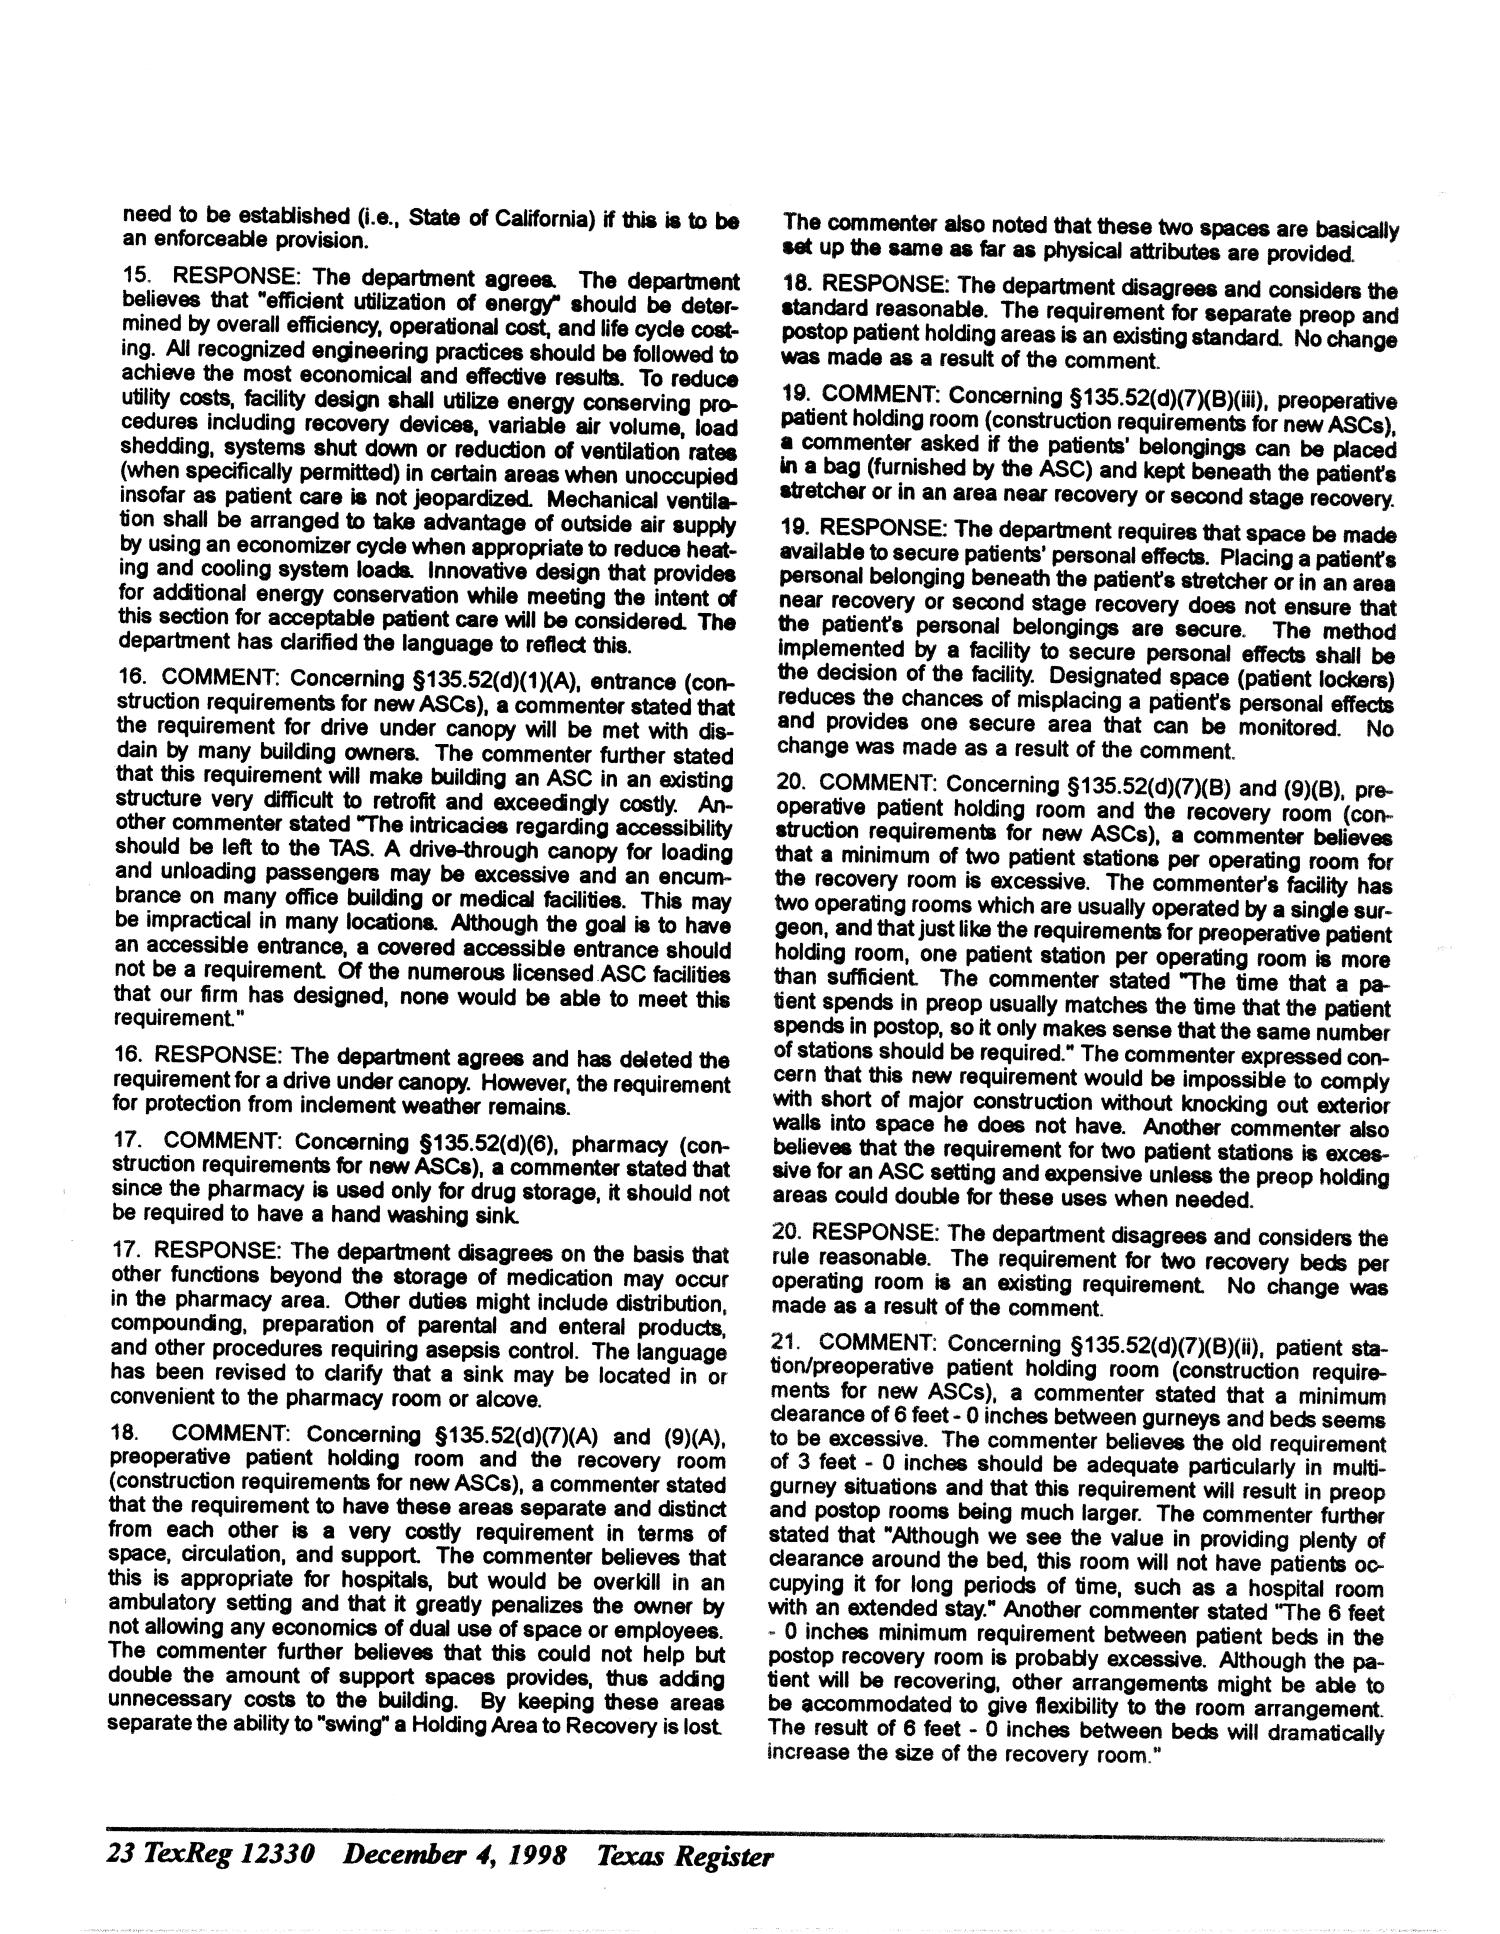 Texas Register, Volume 23, Number 49, Part III, Pages 12311-12450, December 4, 1998
                                                
                                                    12330
                                                